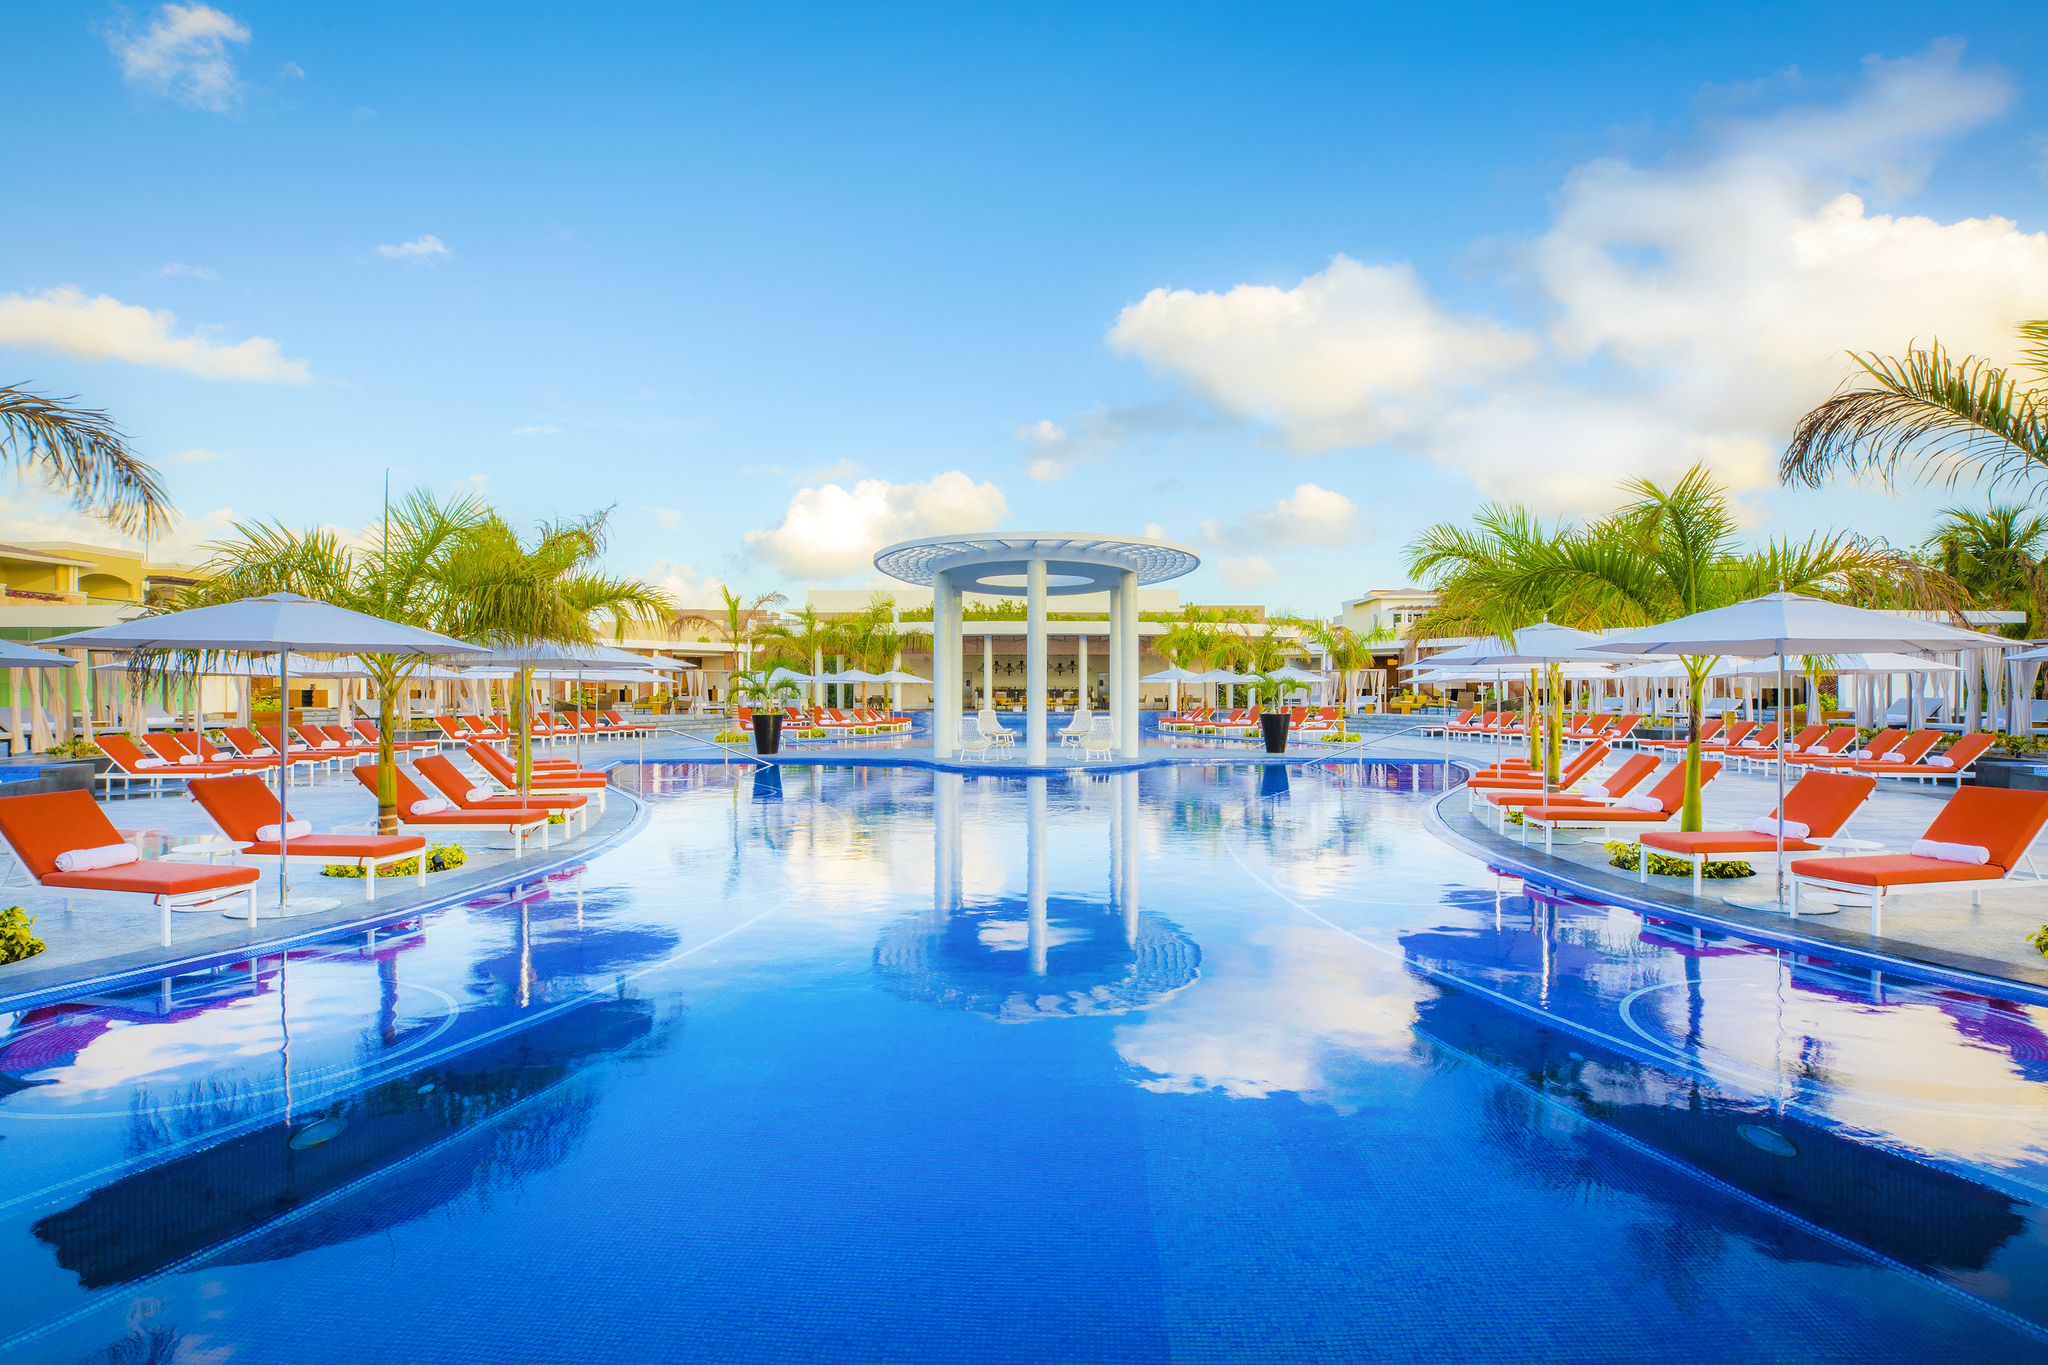 Palace Resorts pool